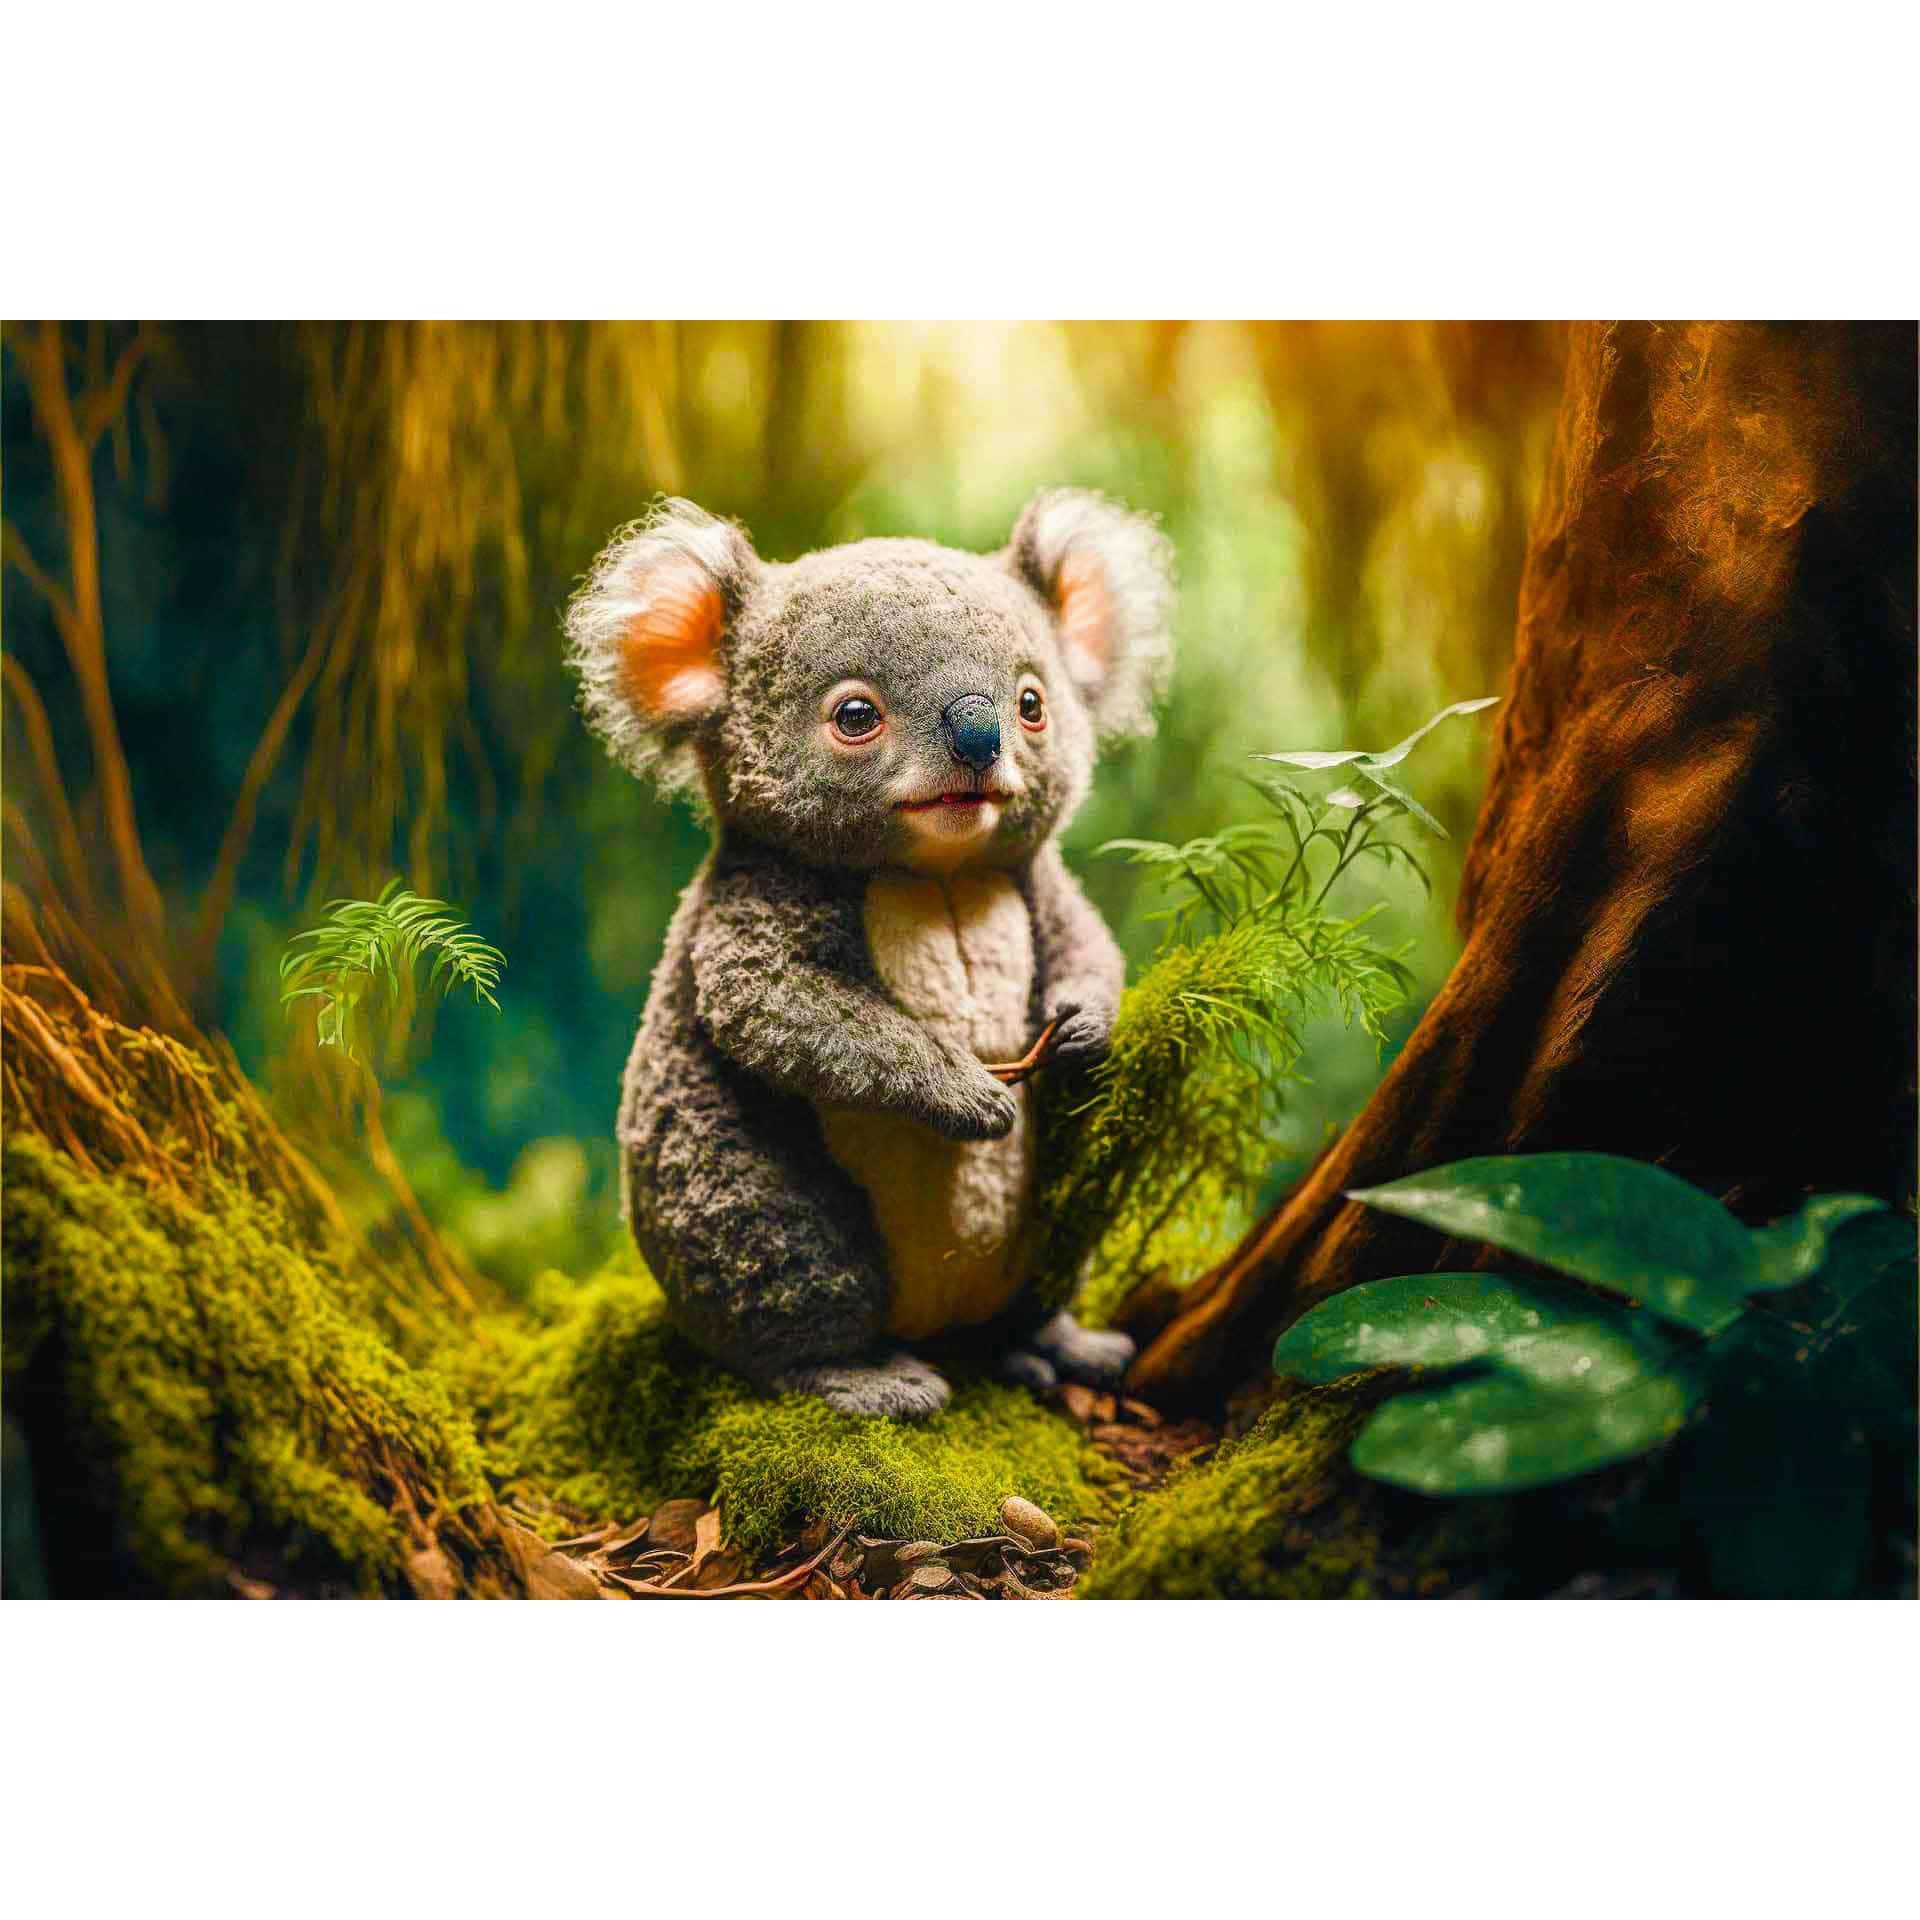 Diamond Painting - Koalabär im Wald - gedruckt in Ultra-HD - Bär, Horizontal, Koala, Tiere